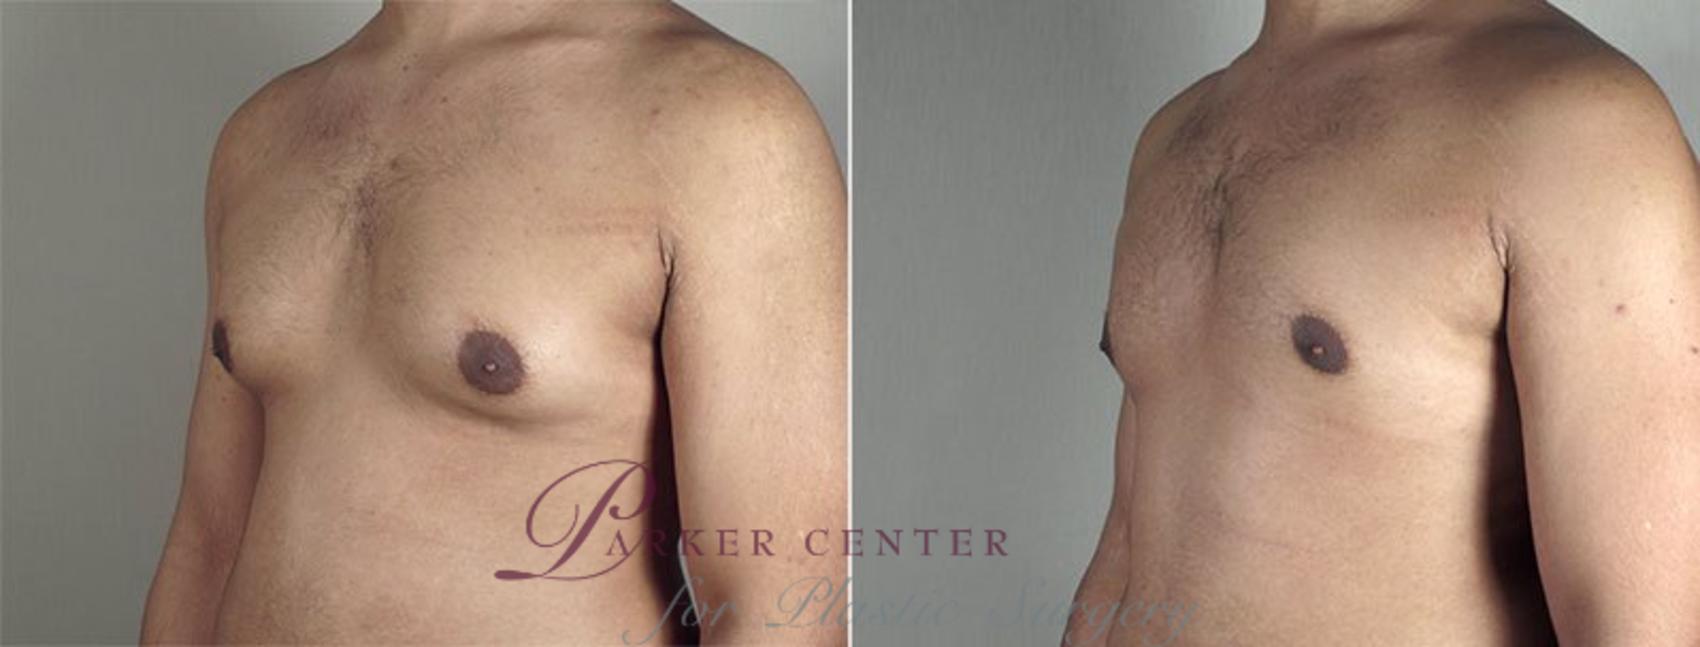 Gynecomastia Surgery Case 651 Before & After View #2 | Paramus, NJ | Parker Center for Plastic Surgery